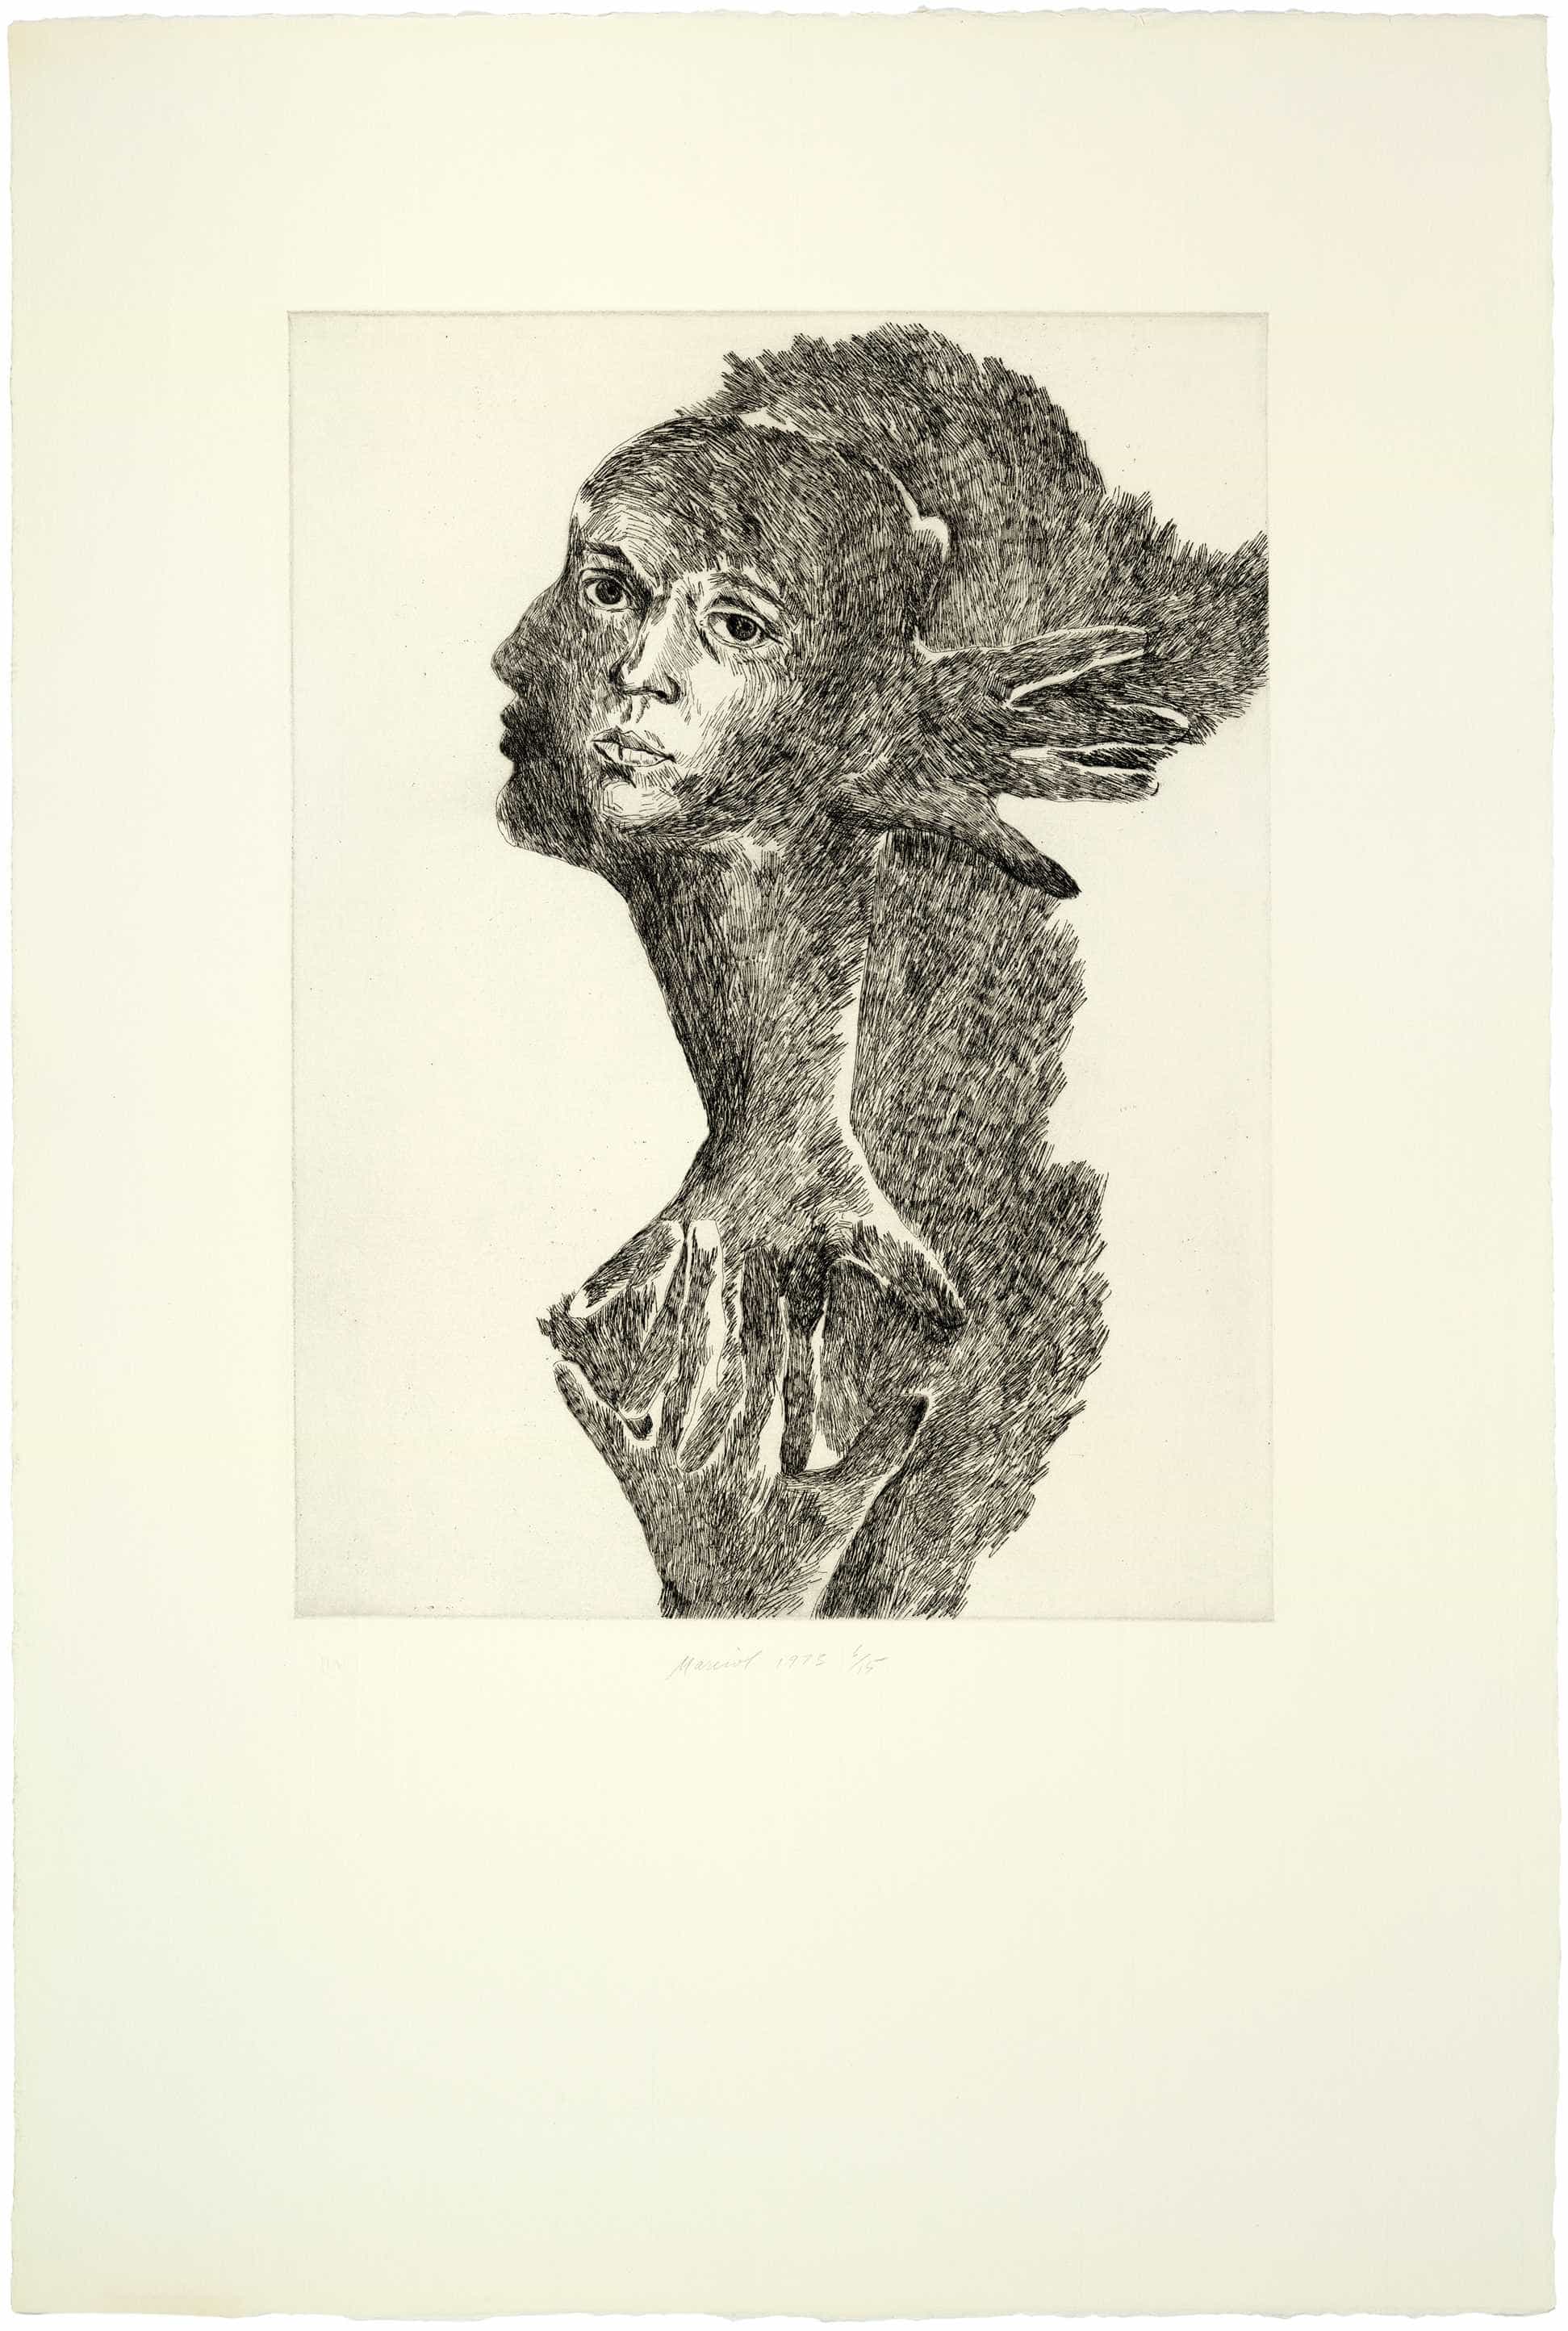 Marisol, Self-Portrait, 1970-73